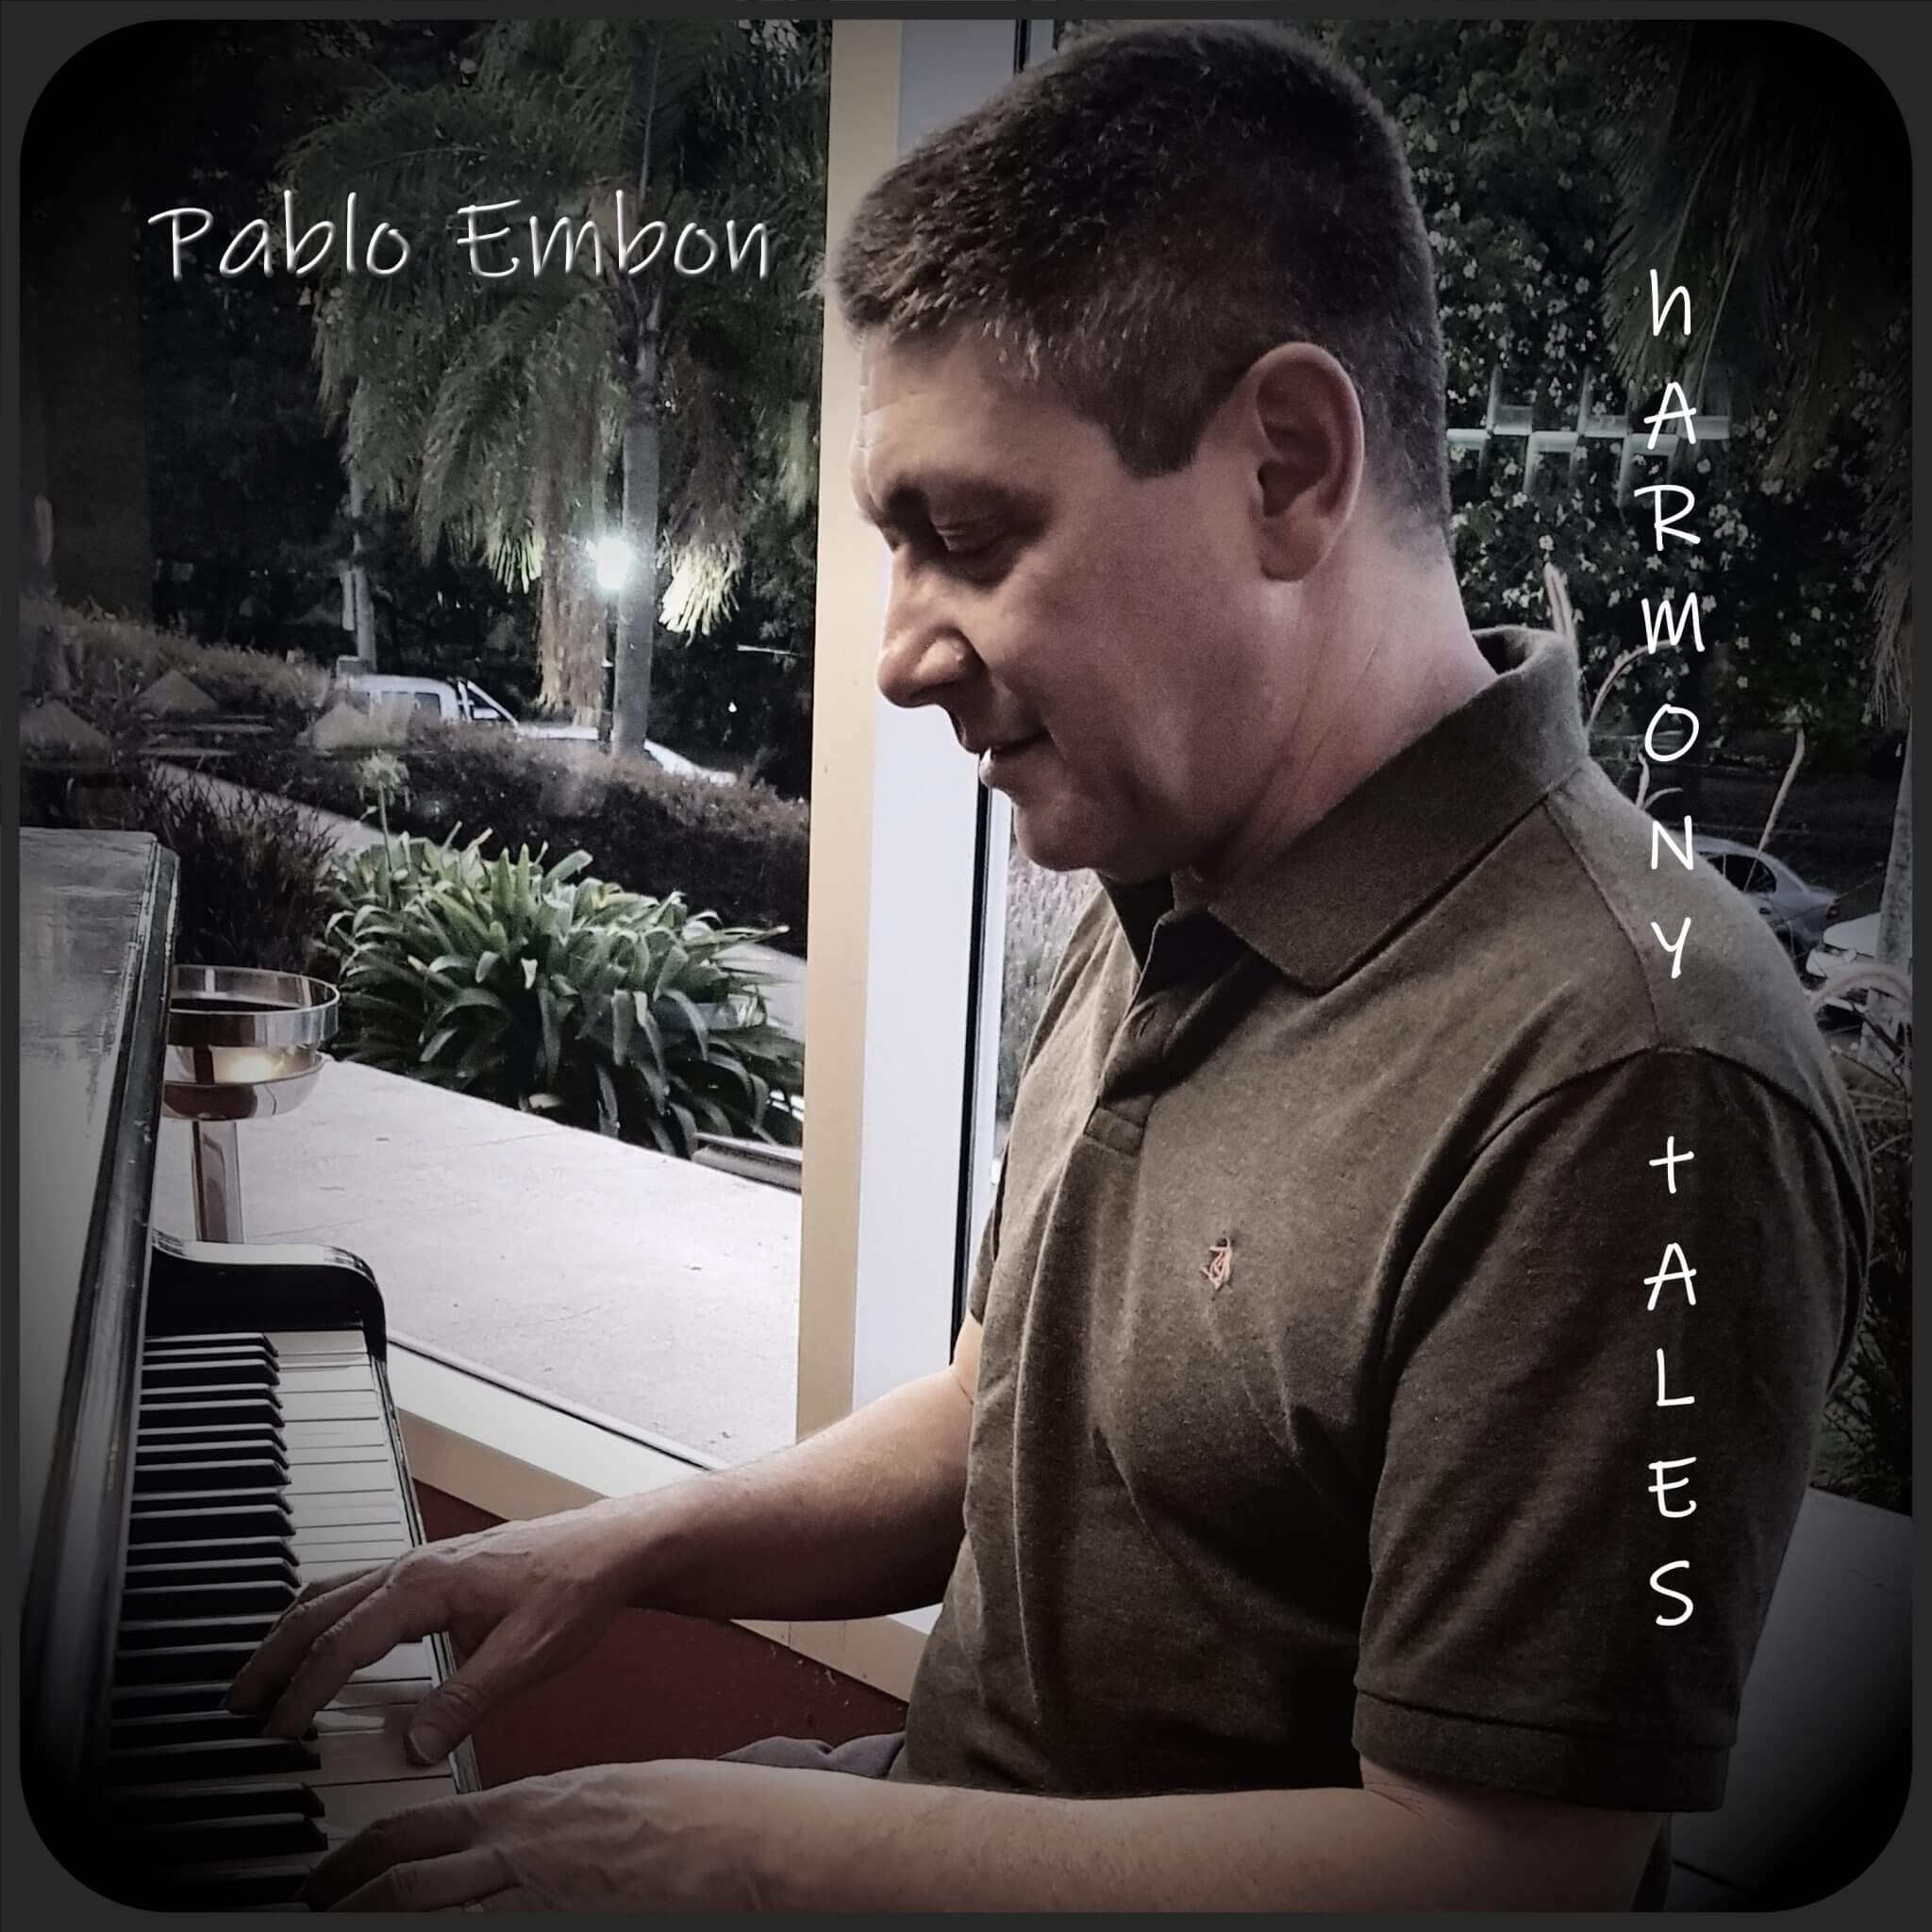 Highly creative jazz fusion Pablo Embon